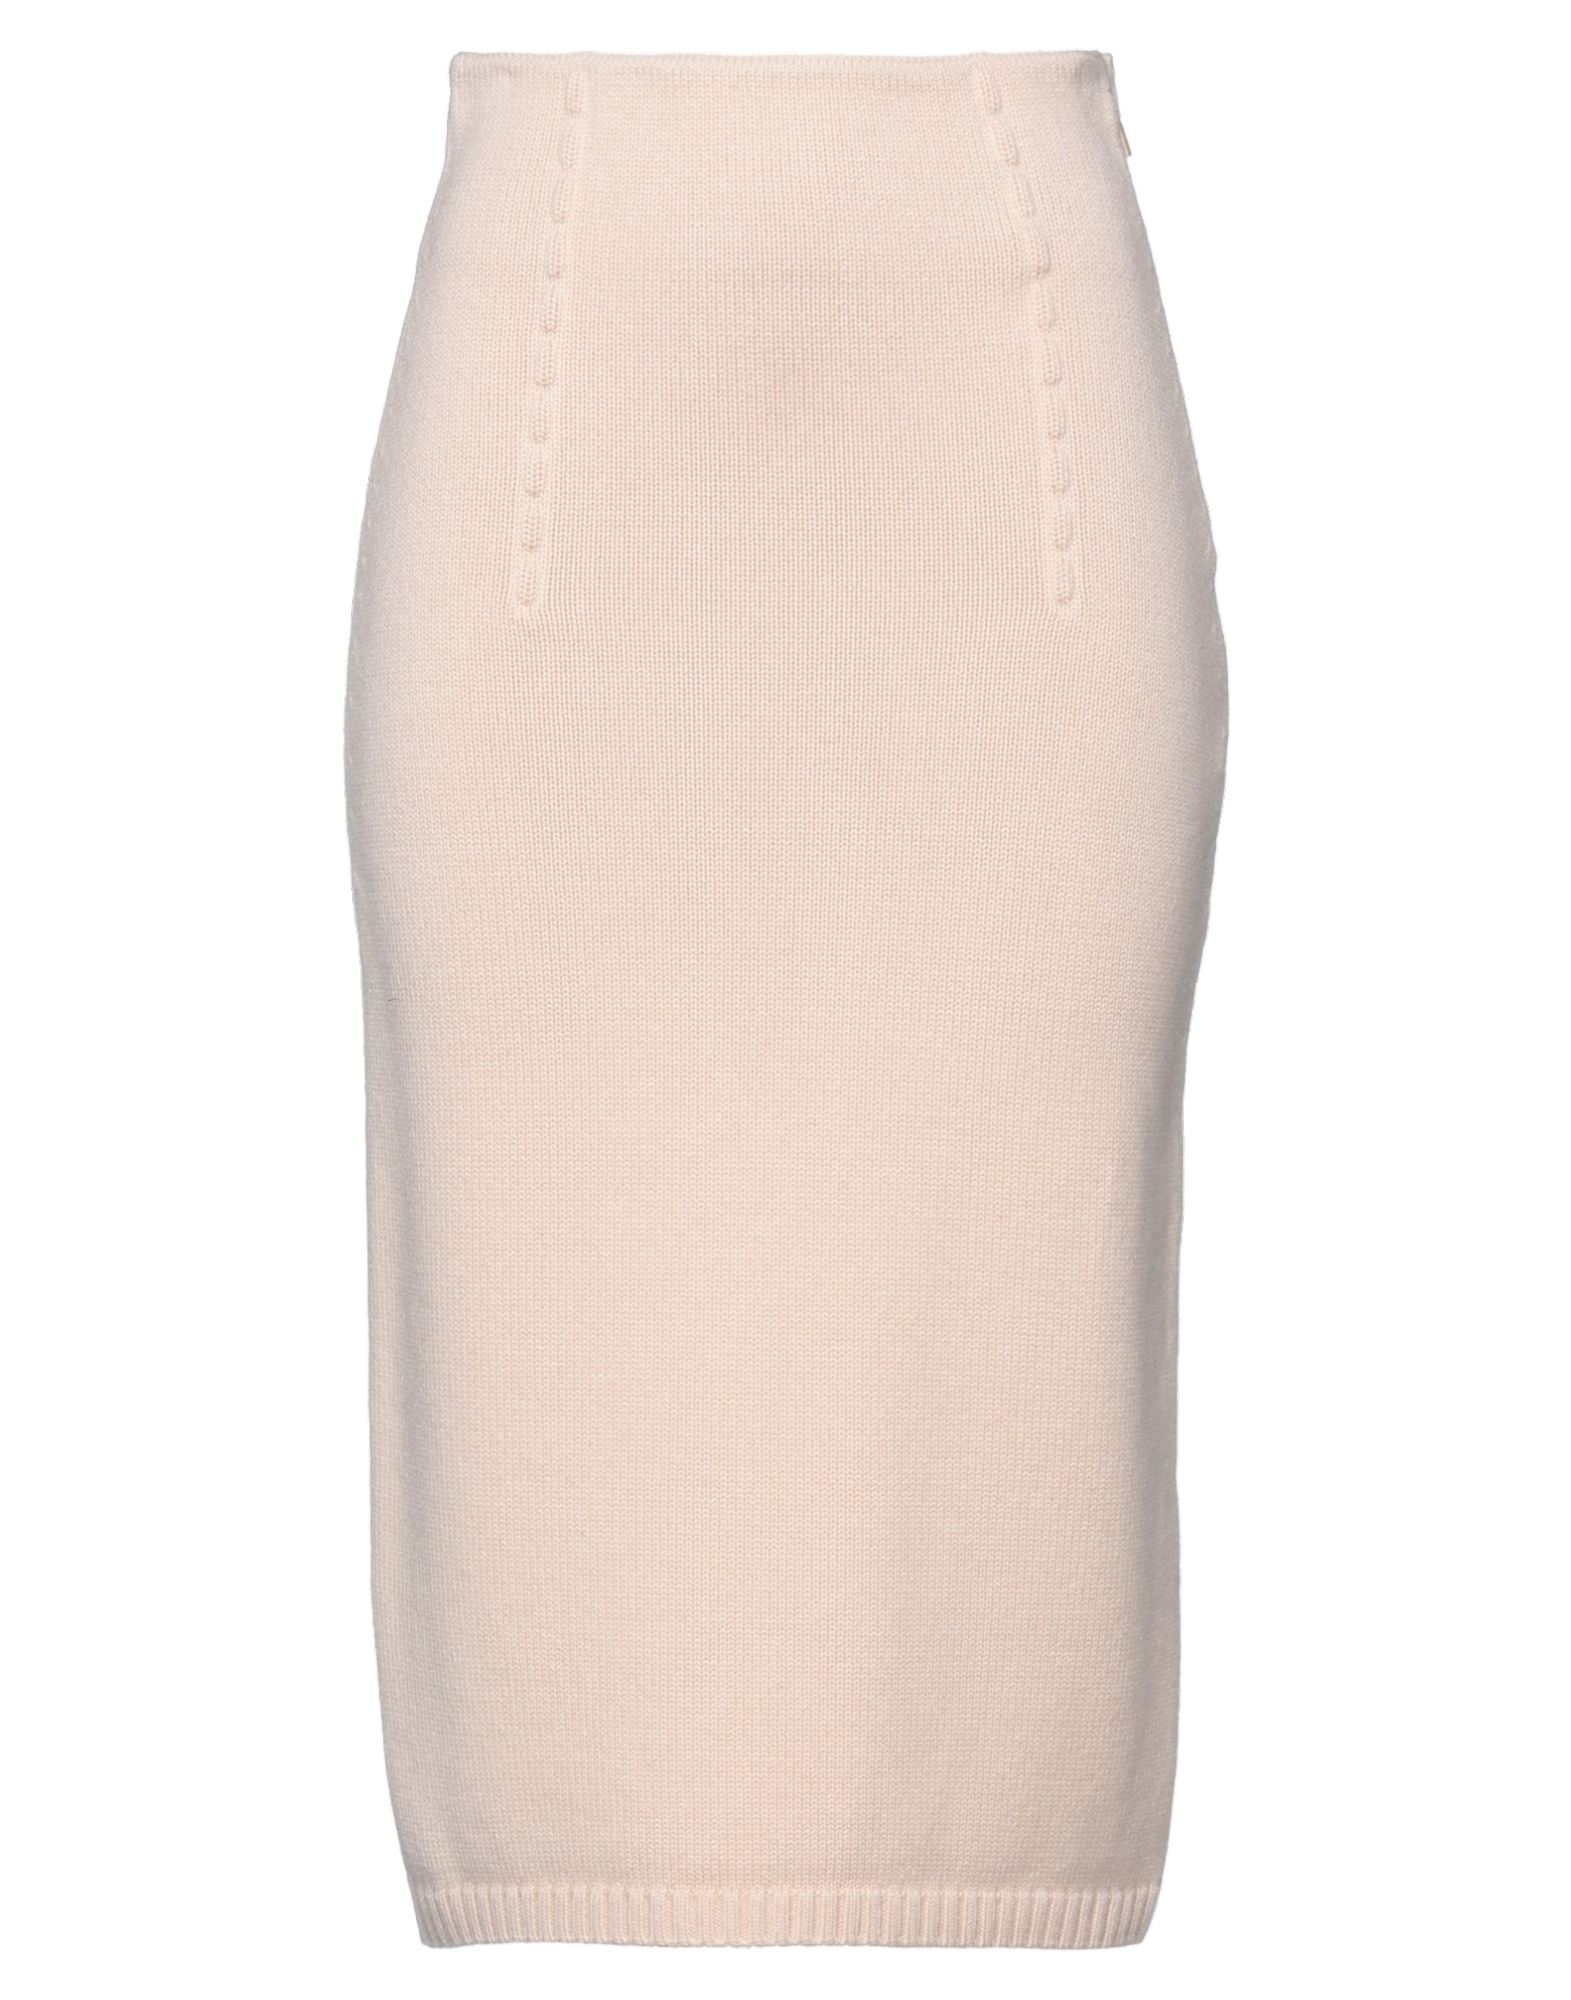 Women's FENDI Skirts Sale, Up To 70% Off | ModeSens